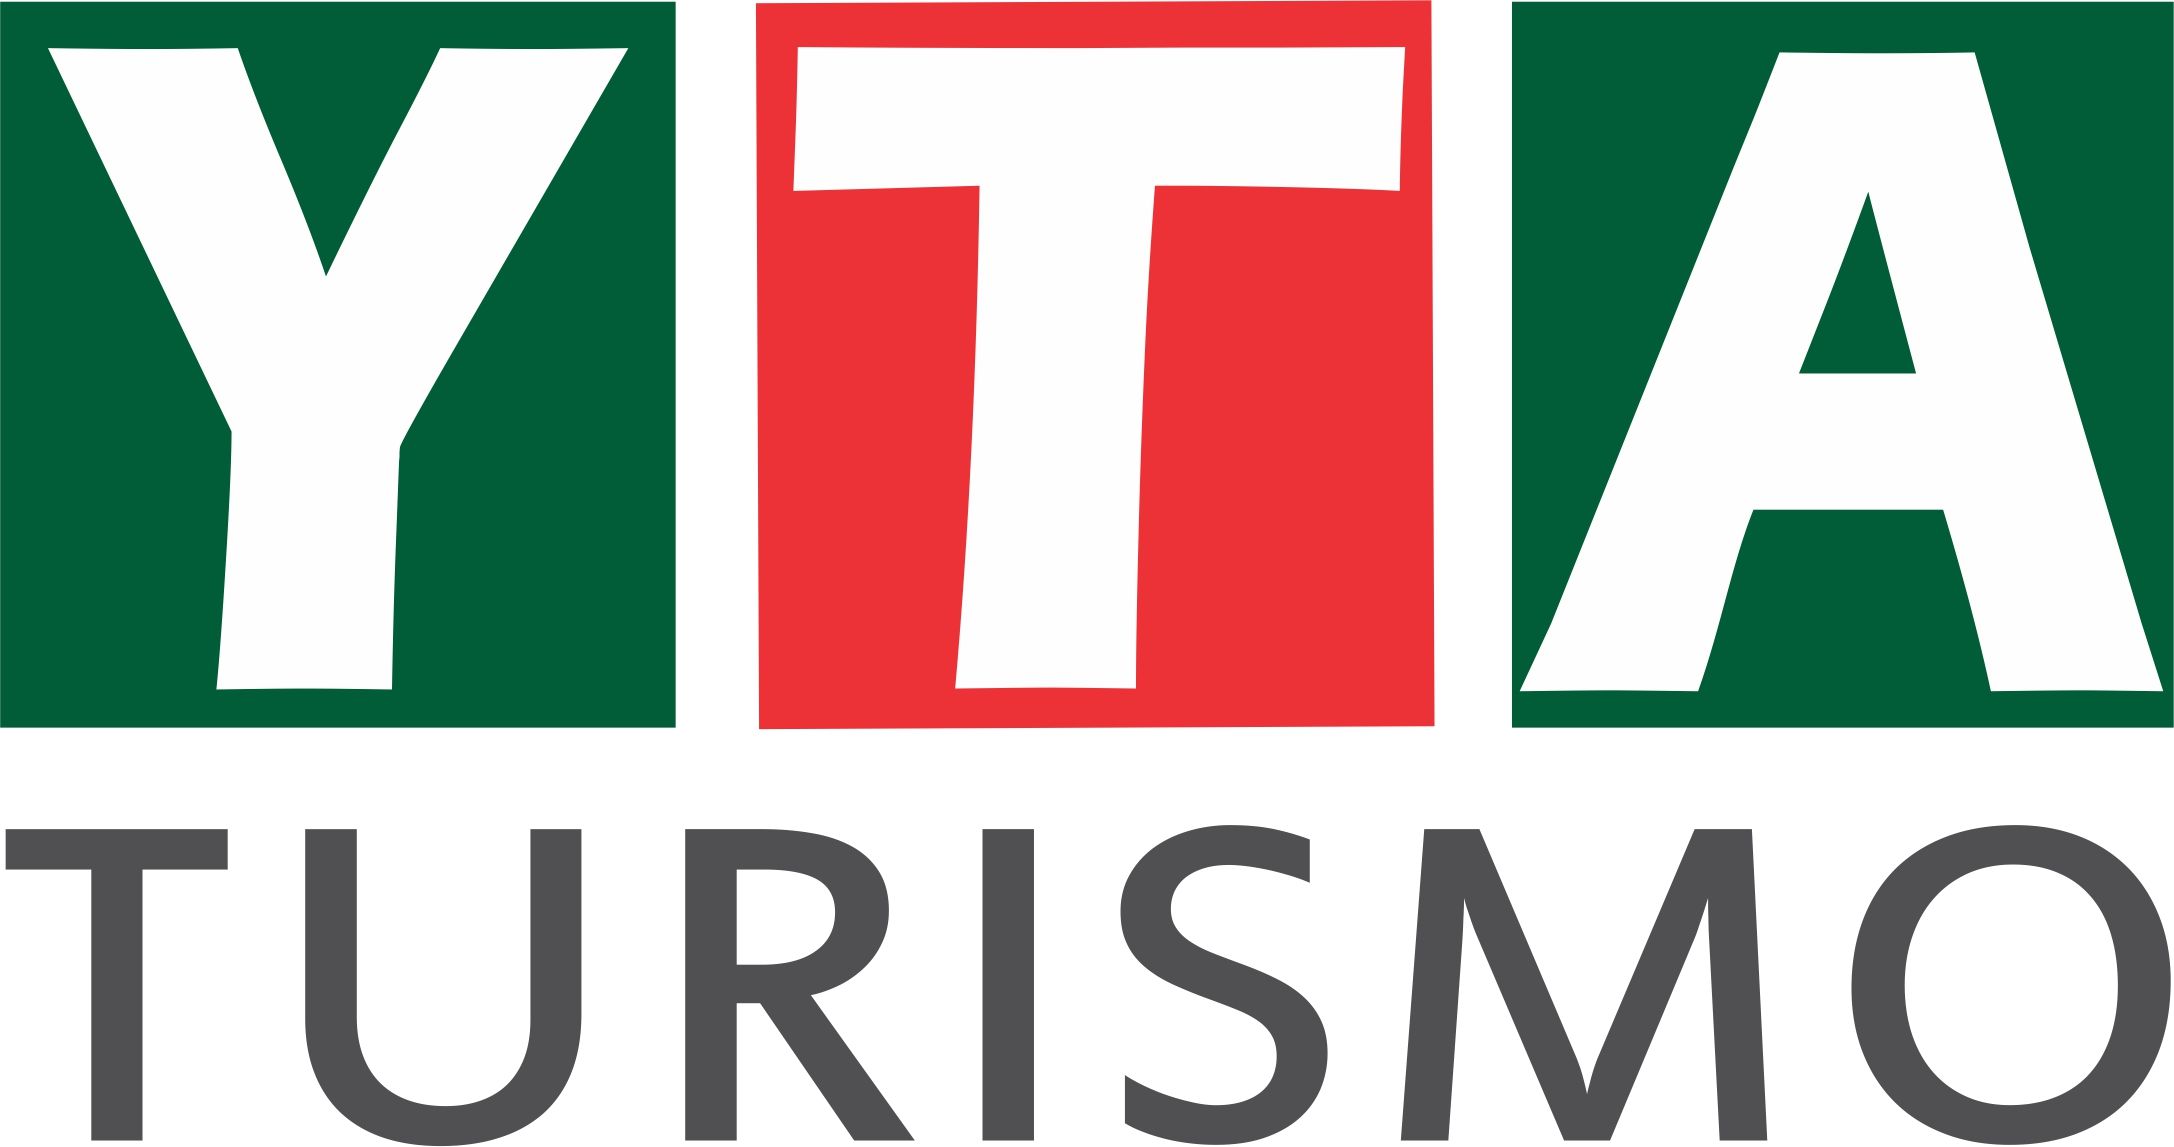 YTA Turismo ltda.